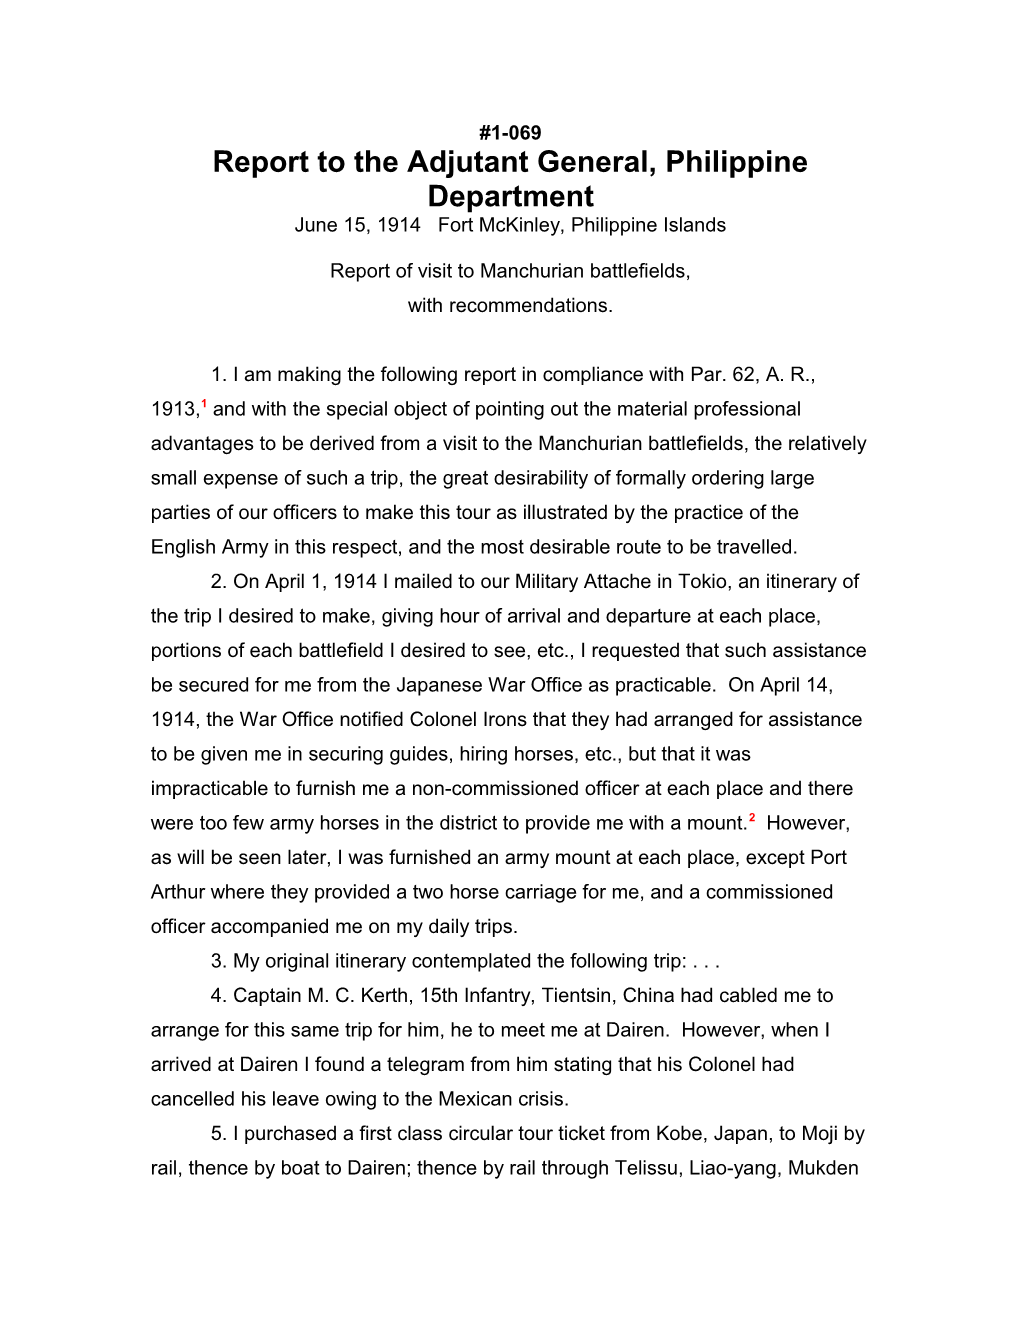 Report to the Adjutant General, Philippine Department